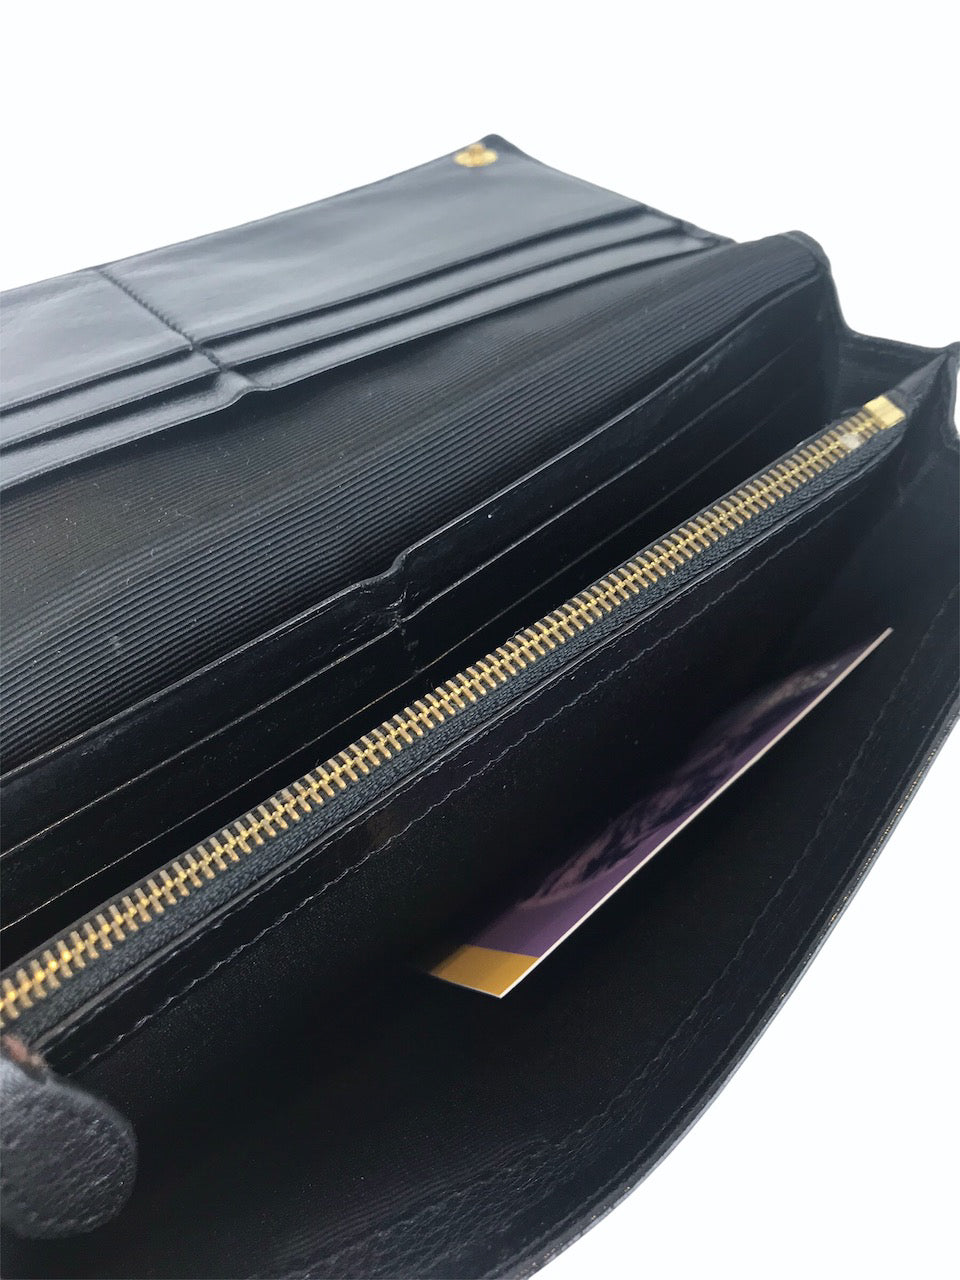 Mulberry Black Leather Wallet  - As Seen On Instagram 09/09/2020 - Siopaella Designer Exchange